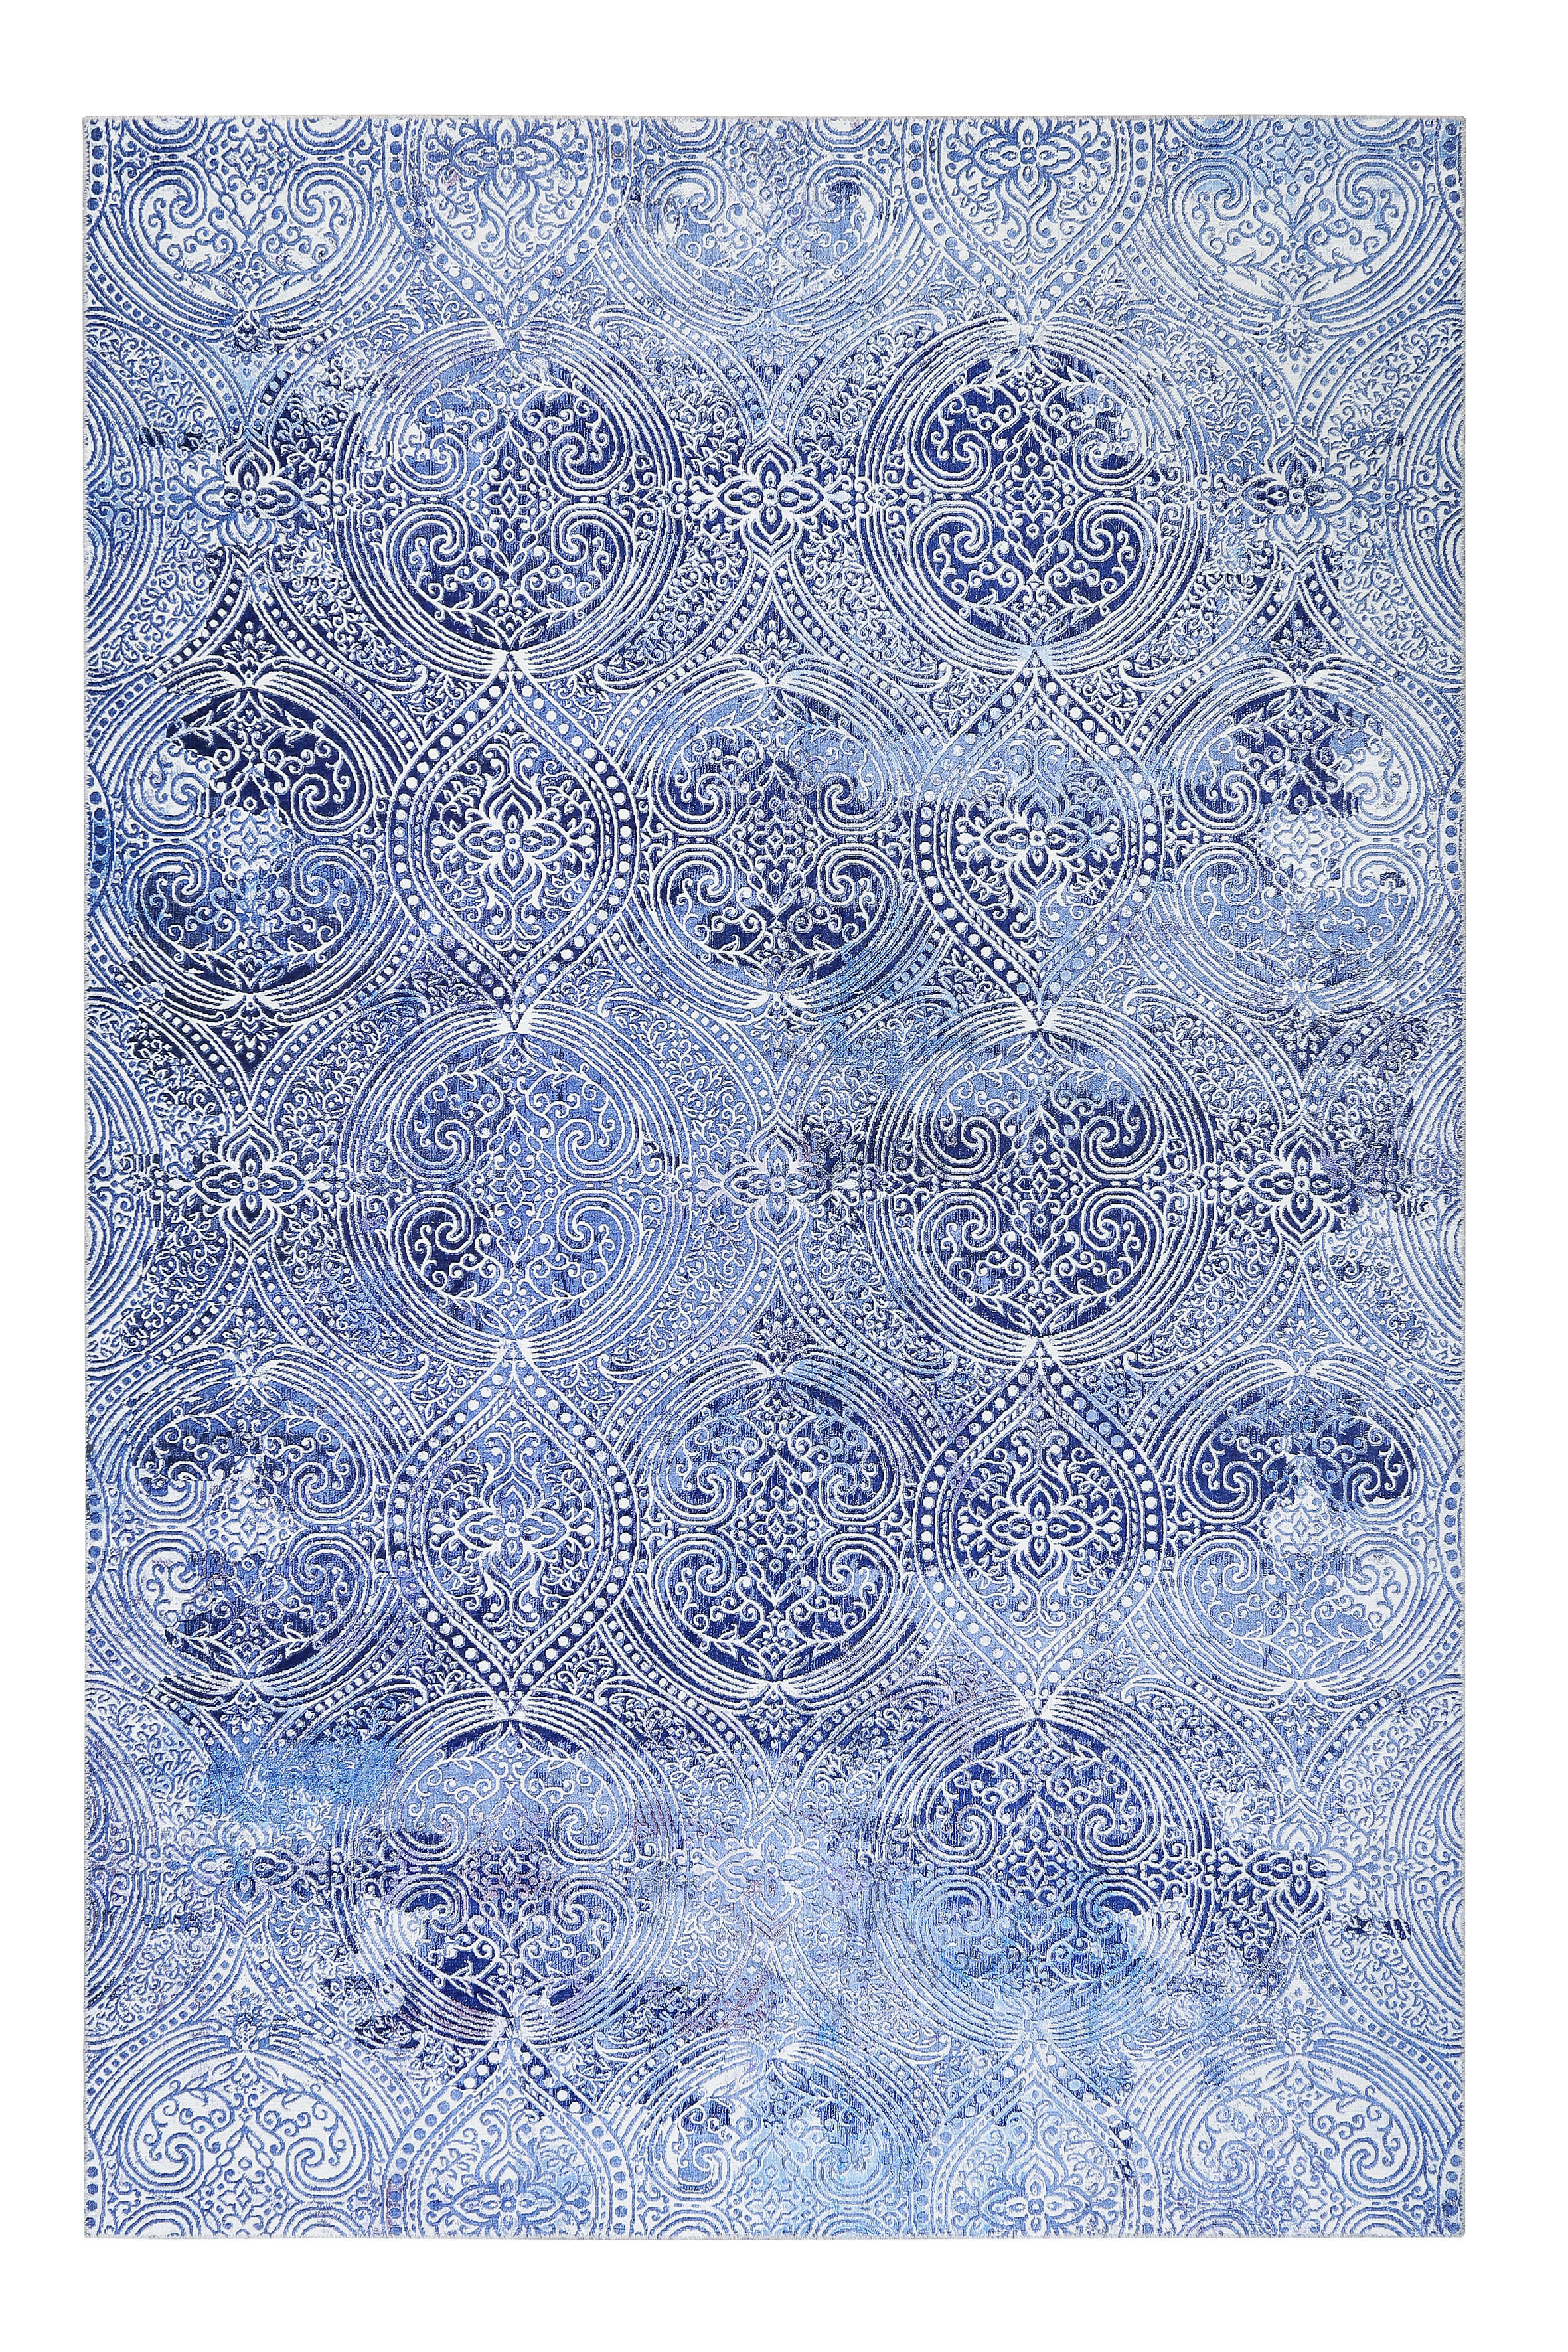 Esprit TKANÝ KOBEREC, 160/230 cm, modrá, barvy stříbra - modrá,barvy stříbra - textil